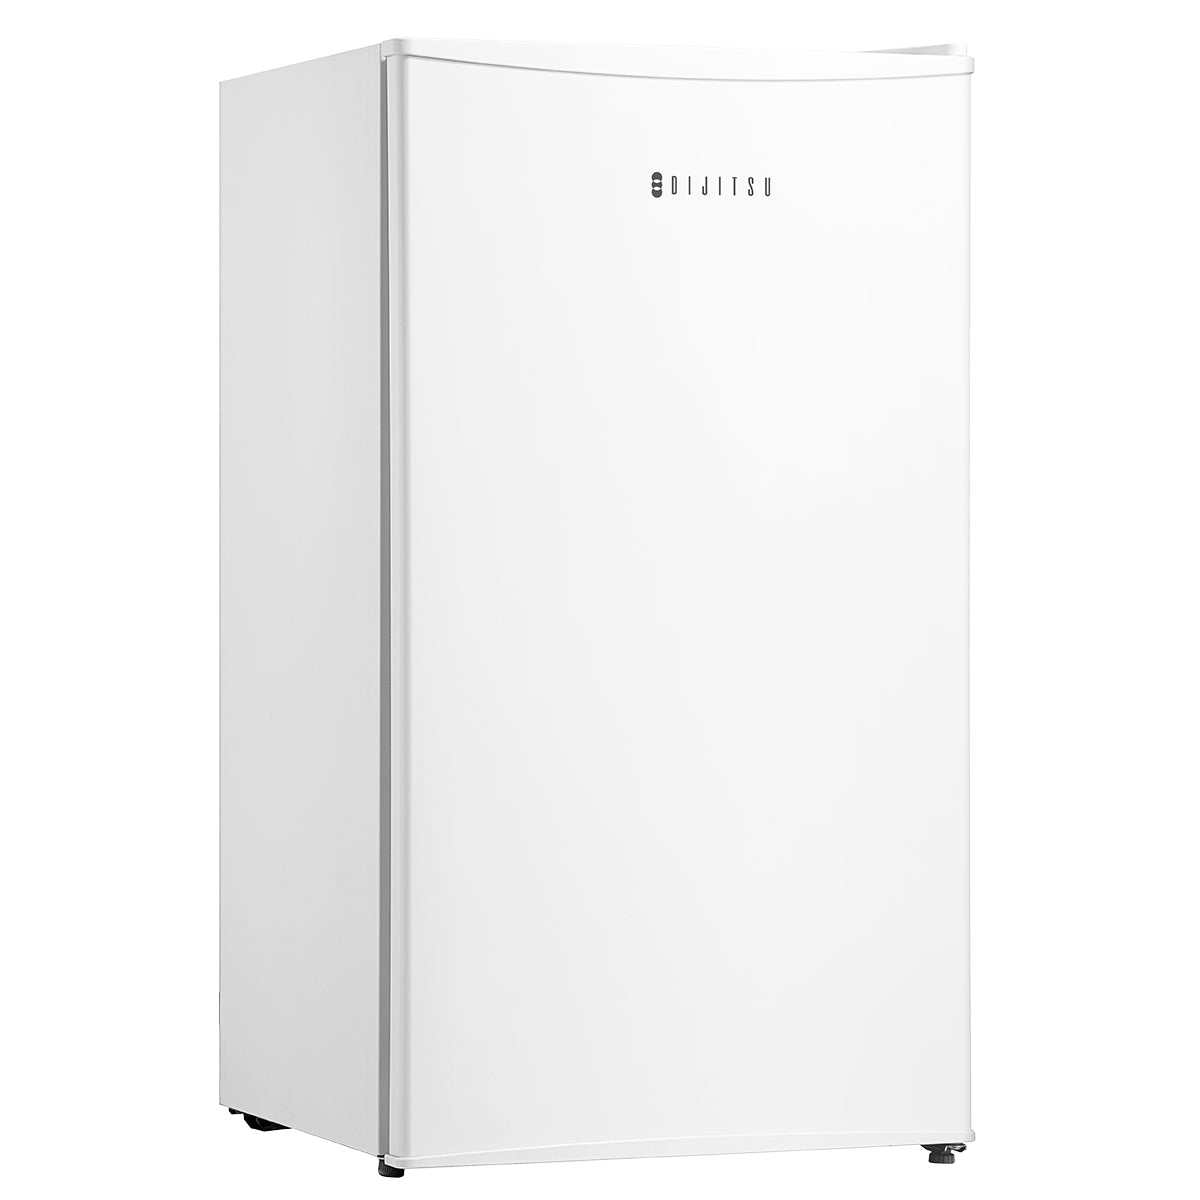 Dijitsu DB 100 Büro Tipi Mini Buzdolabı